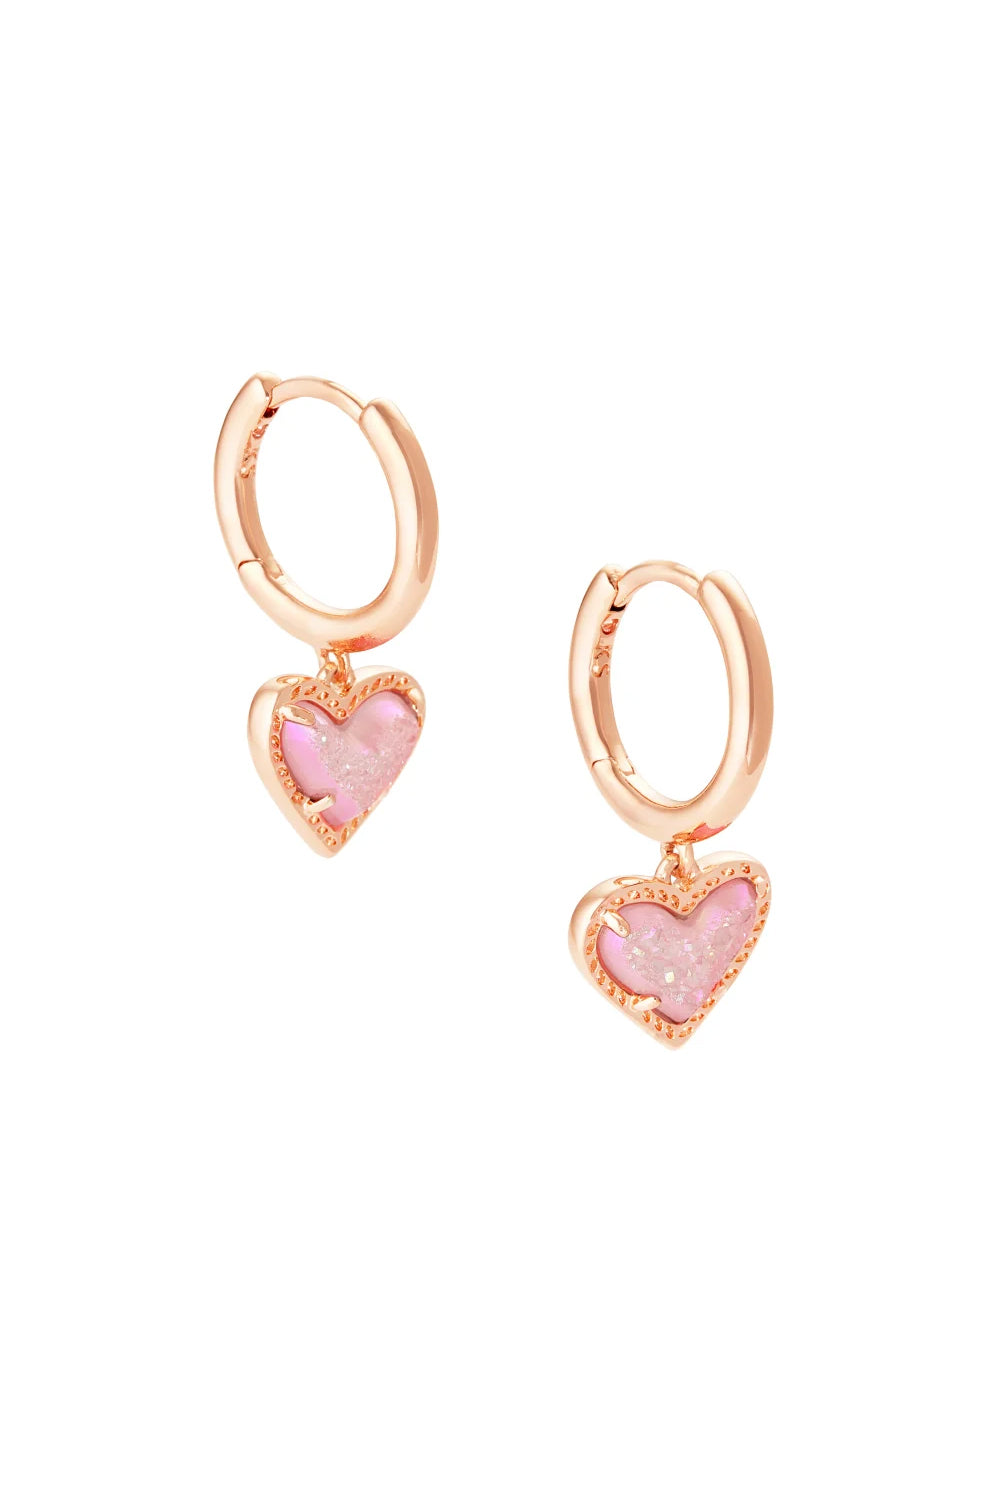 Kendra Scott: Ari Heart Rose Gold Huggie Earrings - Light Pink Drusy | Makk Fashions